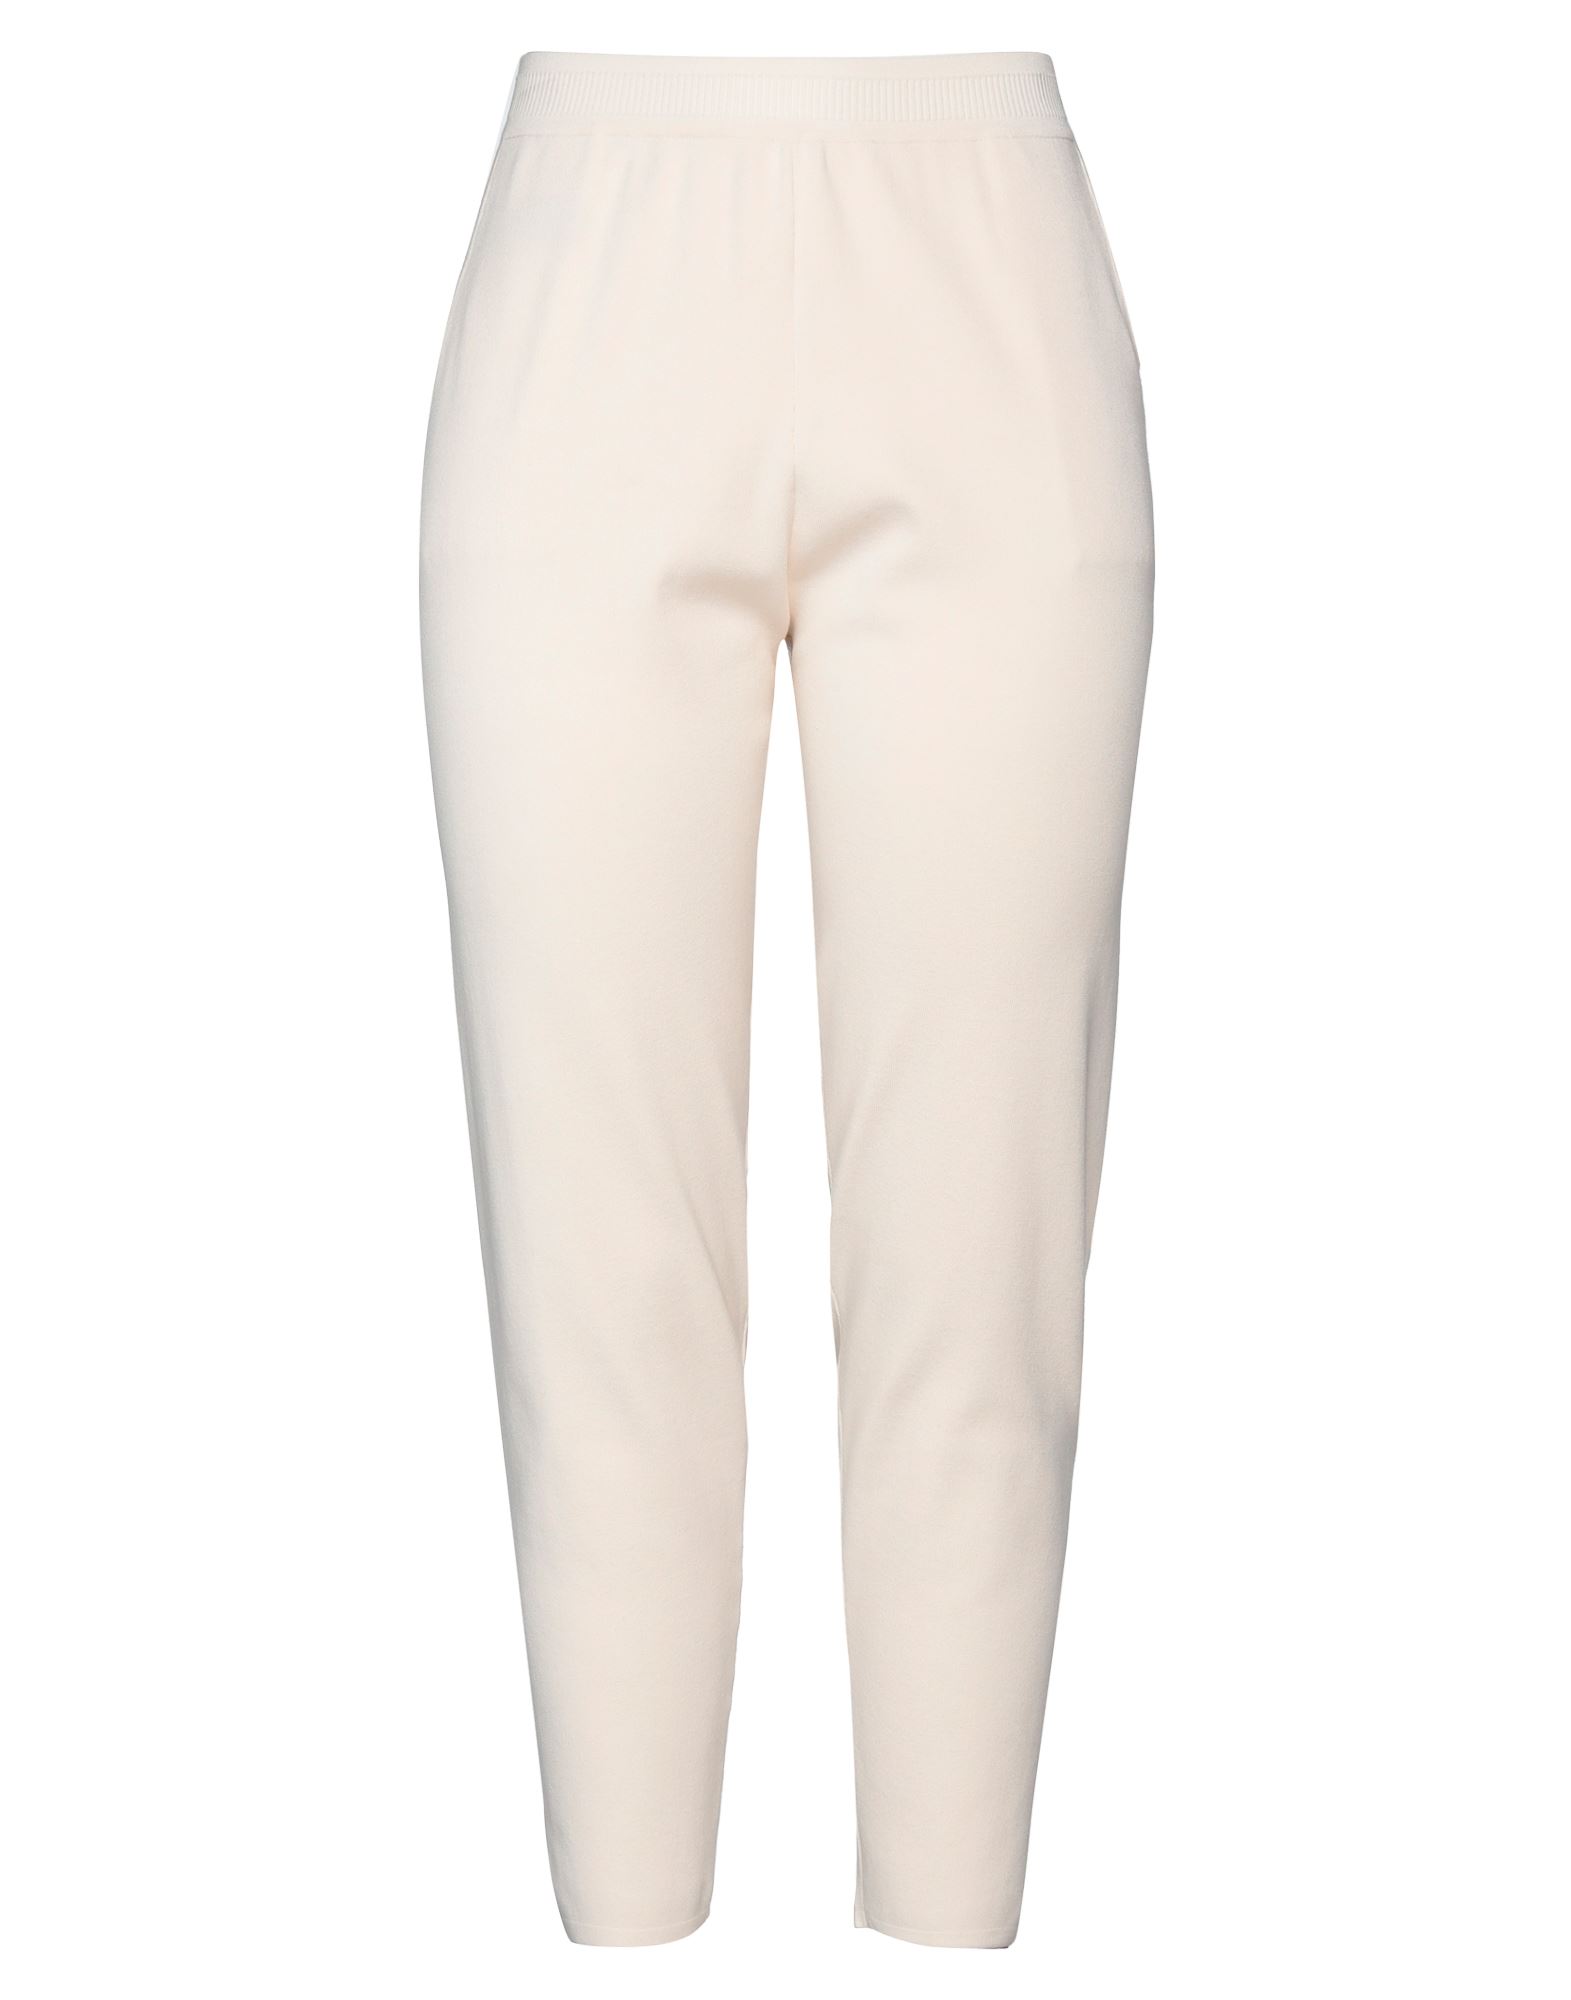 Diana Gallesi Pants In White